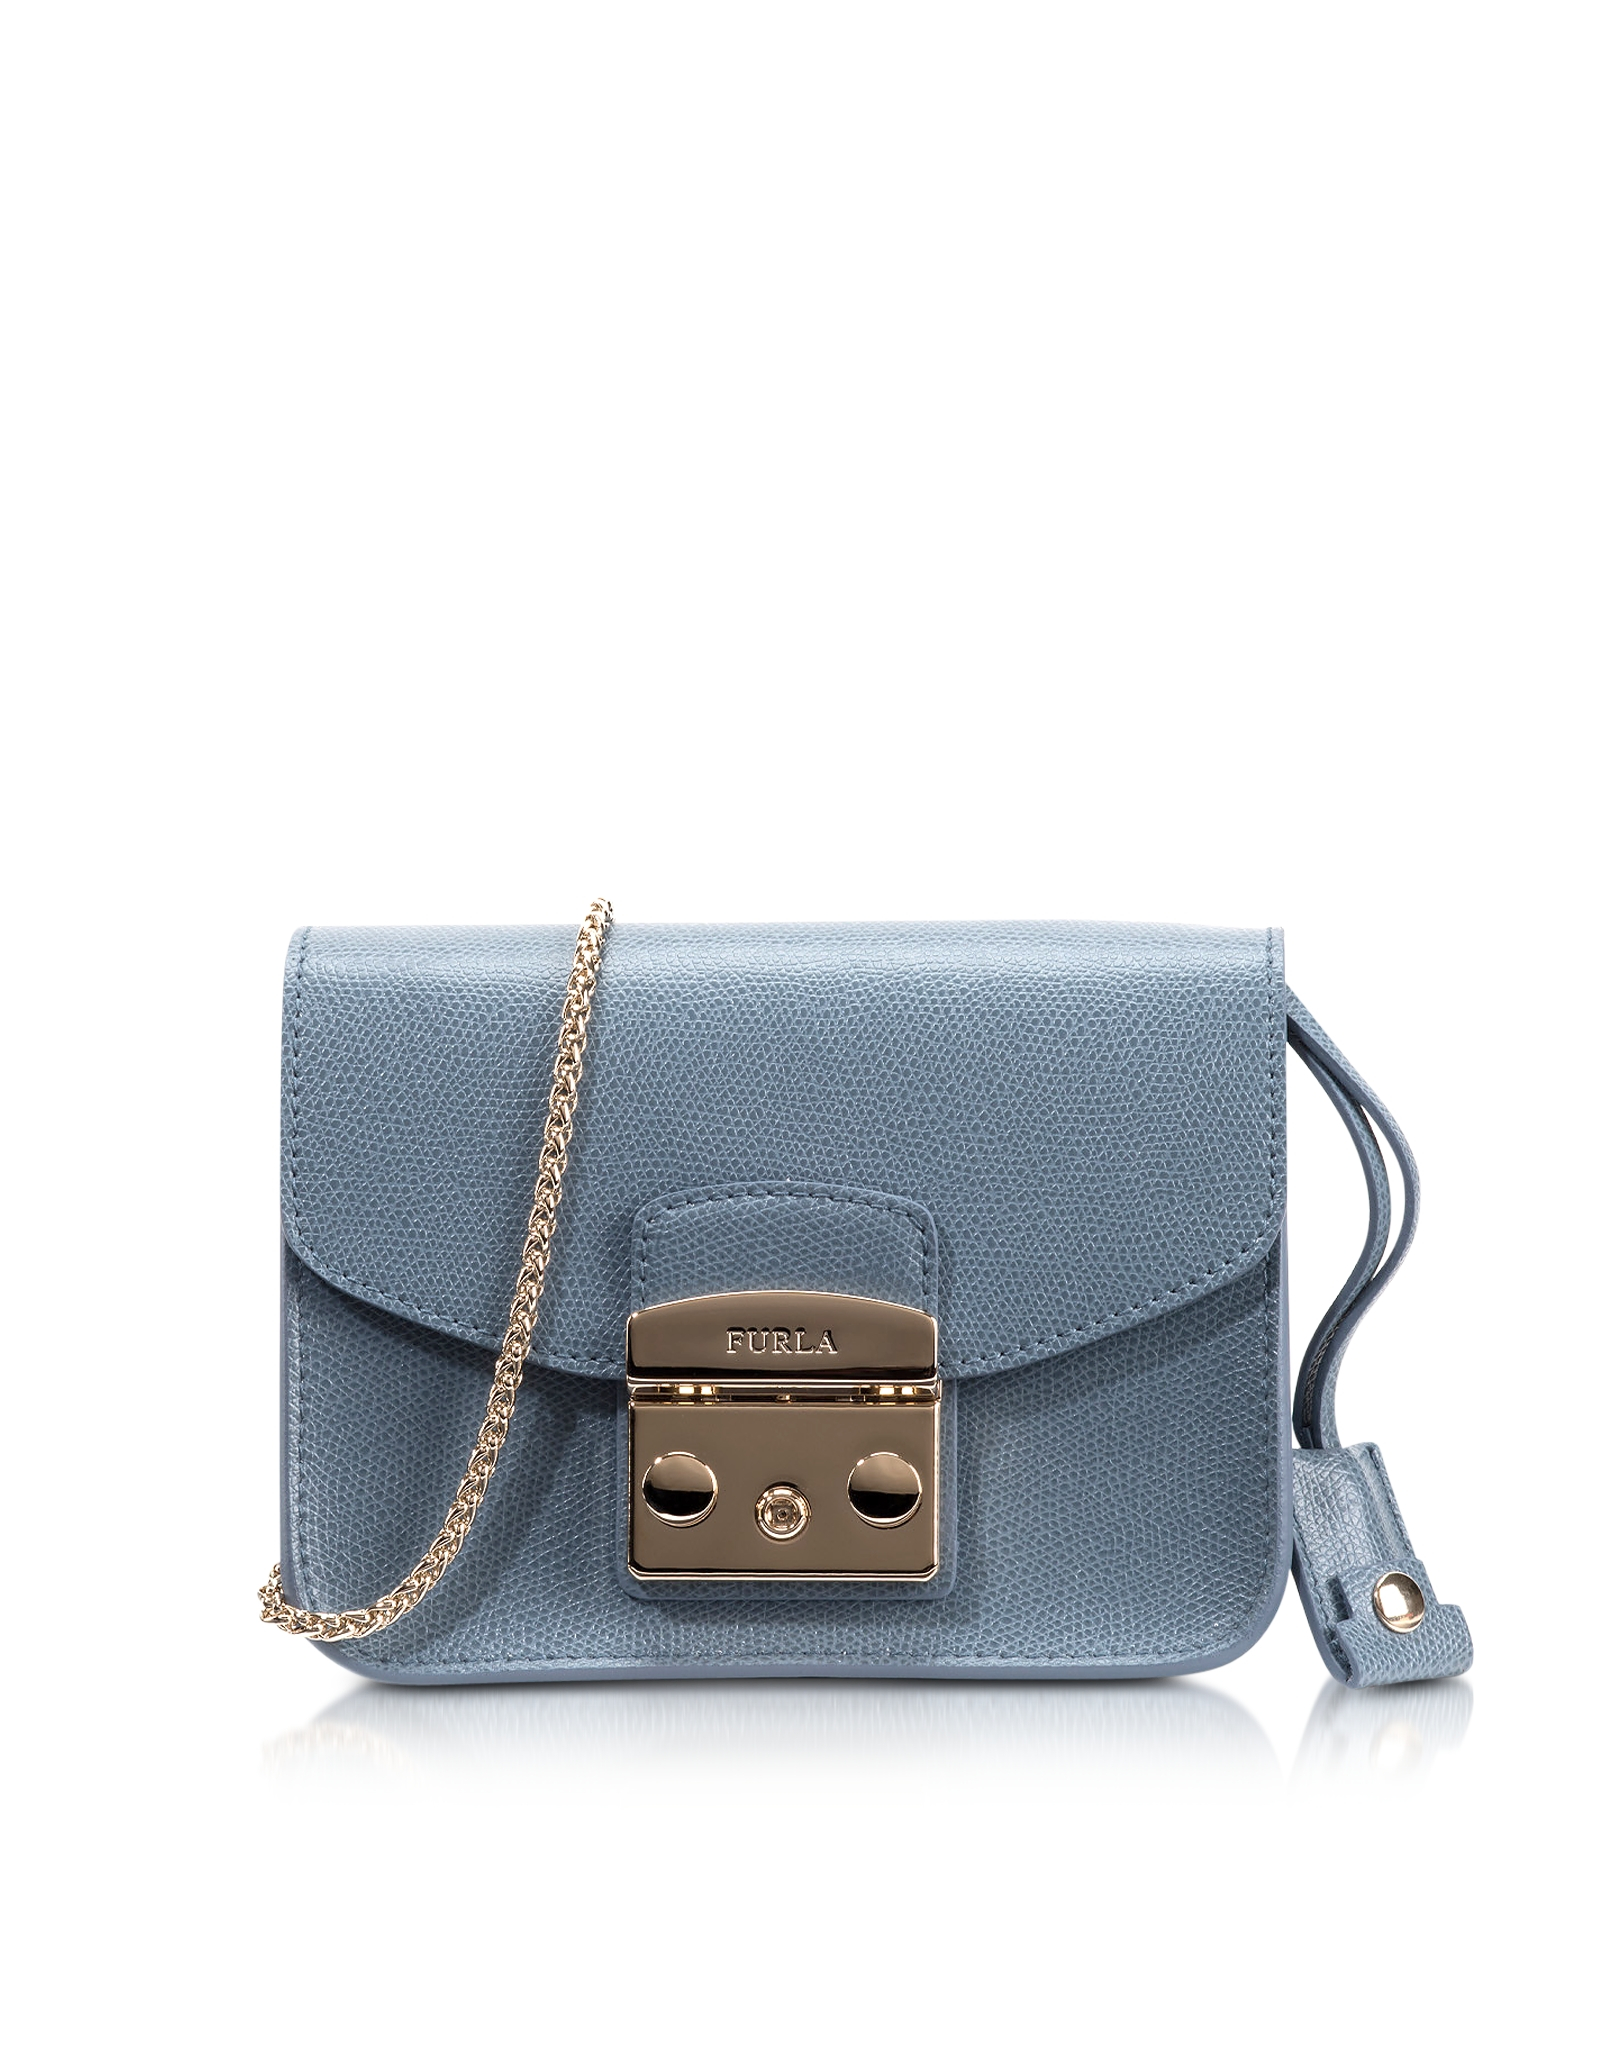 Lyst - Furla Metropolis Dolomia Leather Mini Crossbody Bag in Blue